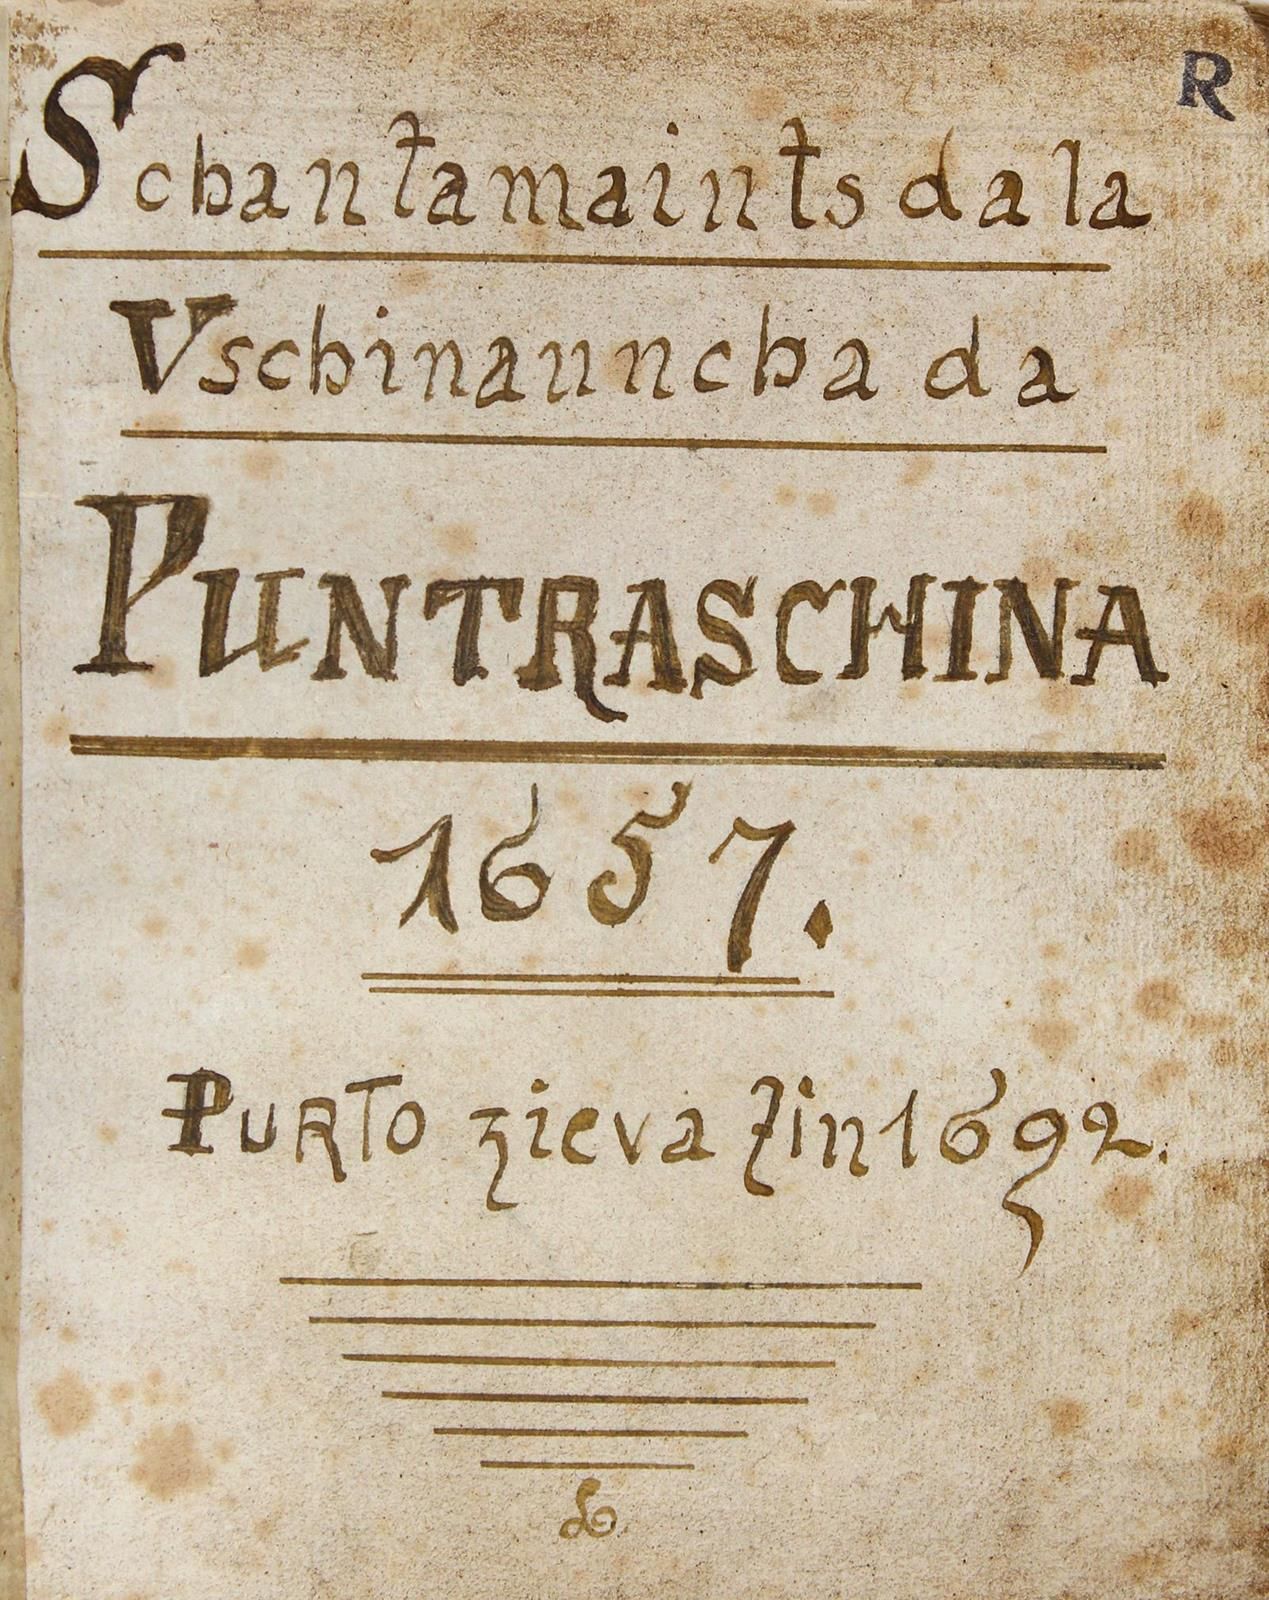 Schantamaints da la Vschinauncha da Puntraschina 1657 purto zieva zin 1692. Räto&hellip;